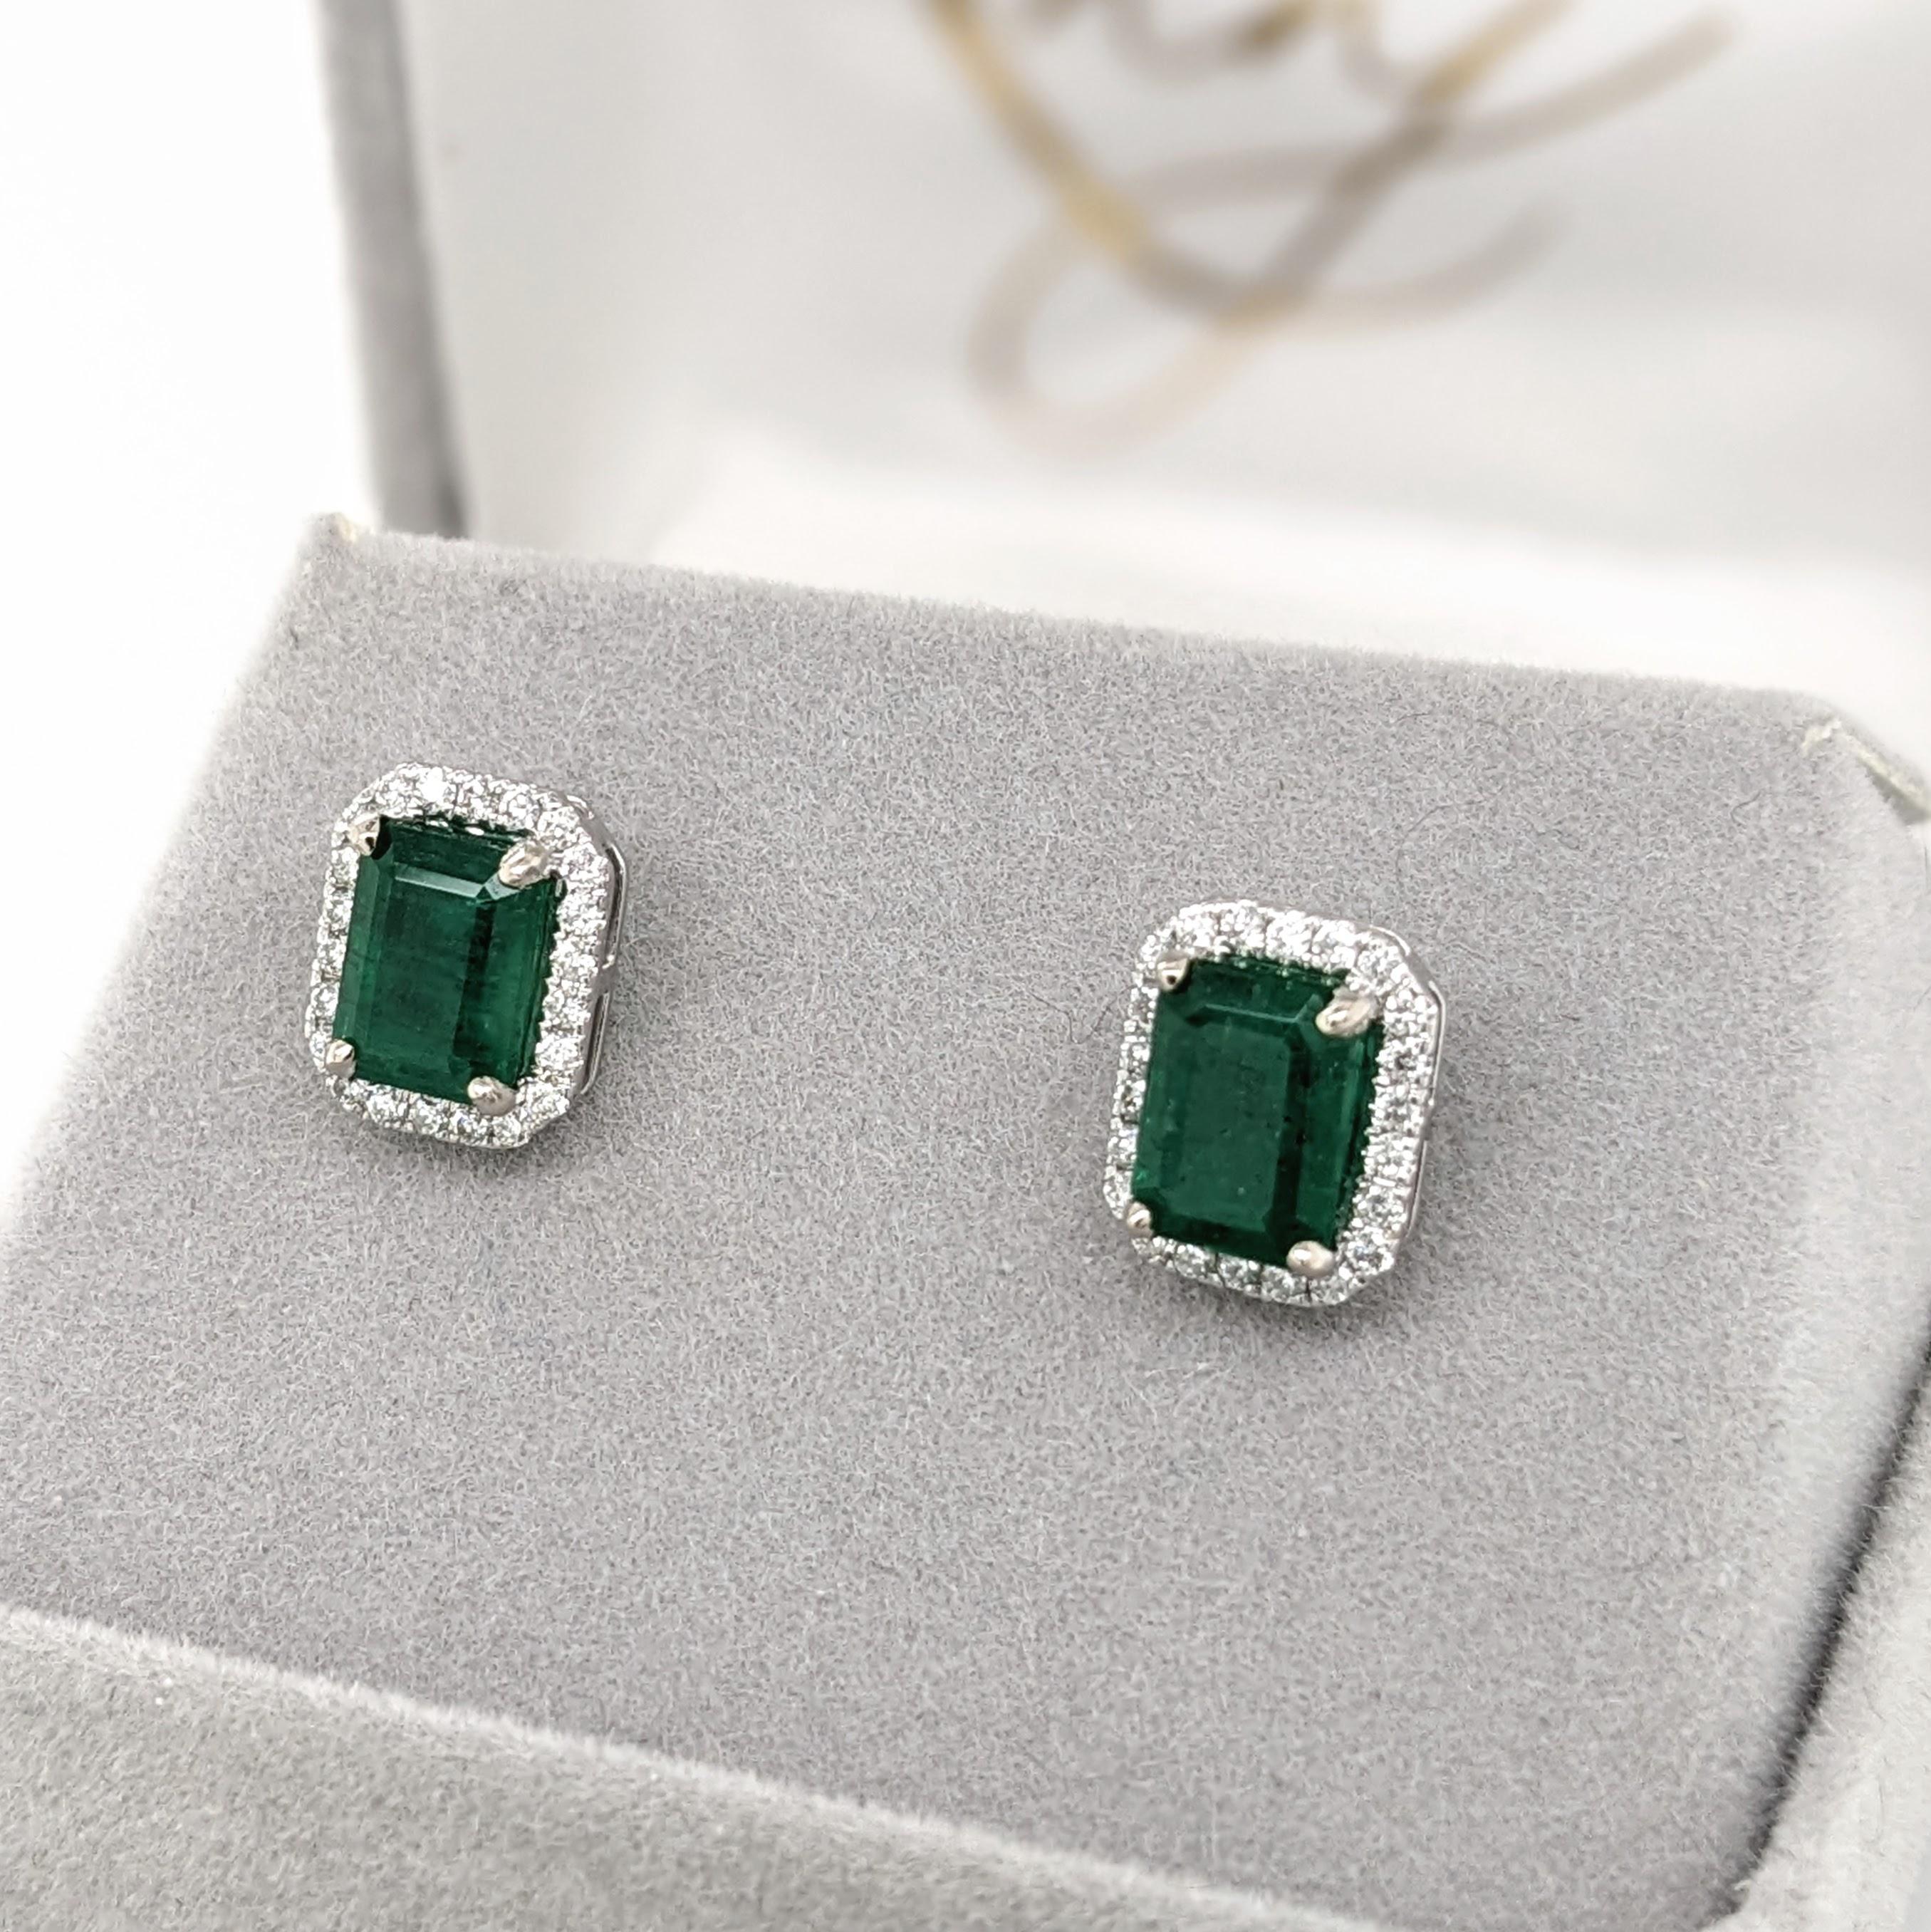 2.3ct Zambian Emerald Stud Earrings w Natural Diamond Halo in Solid 14K Gold 7x5 4